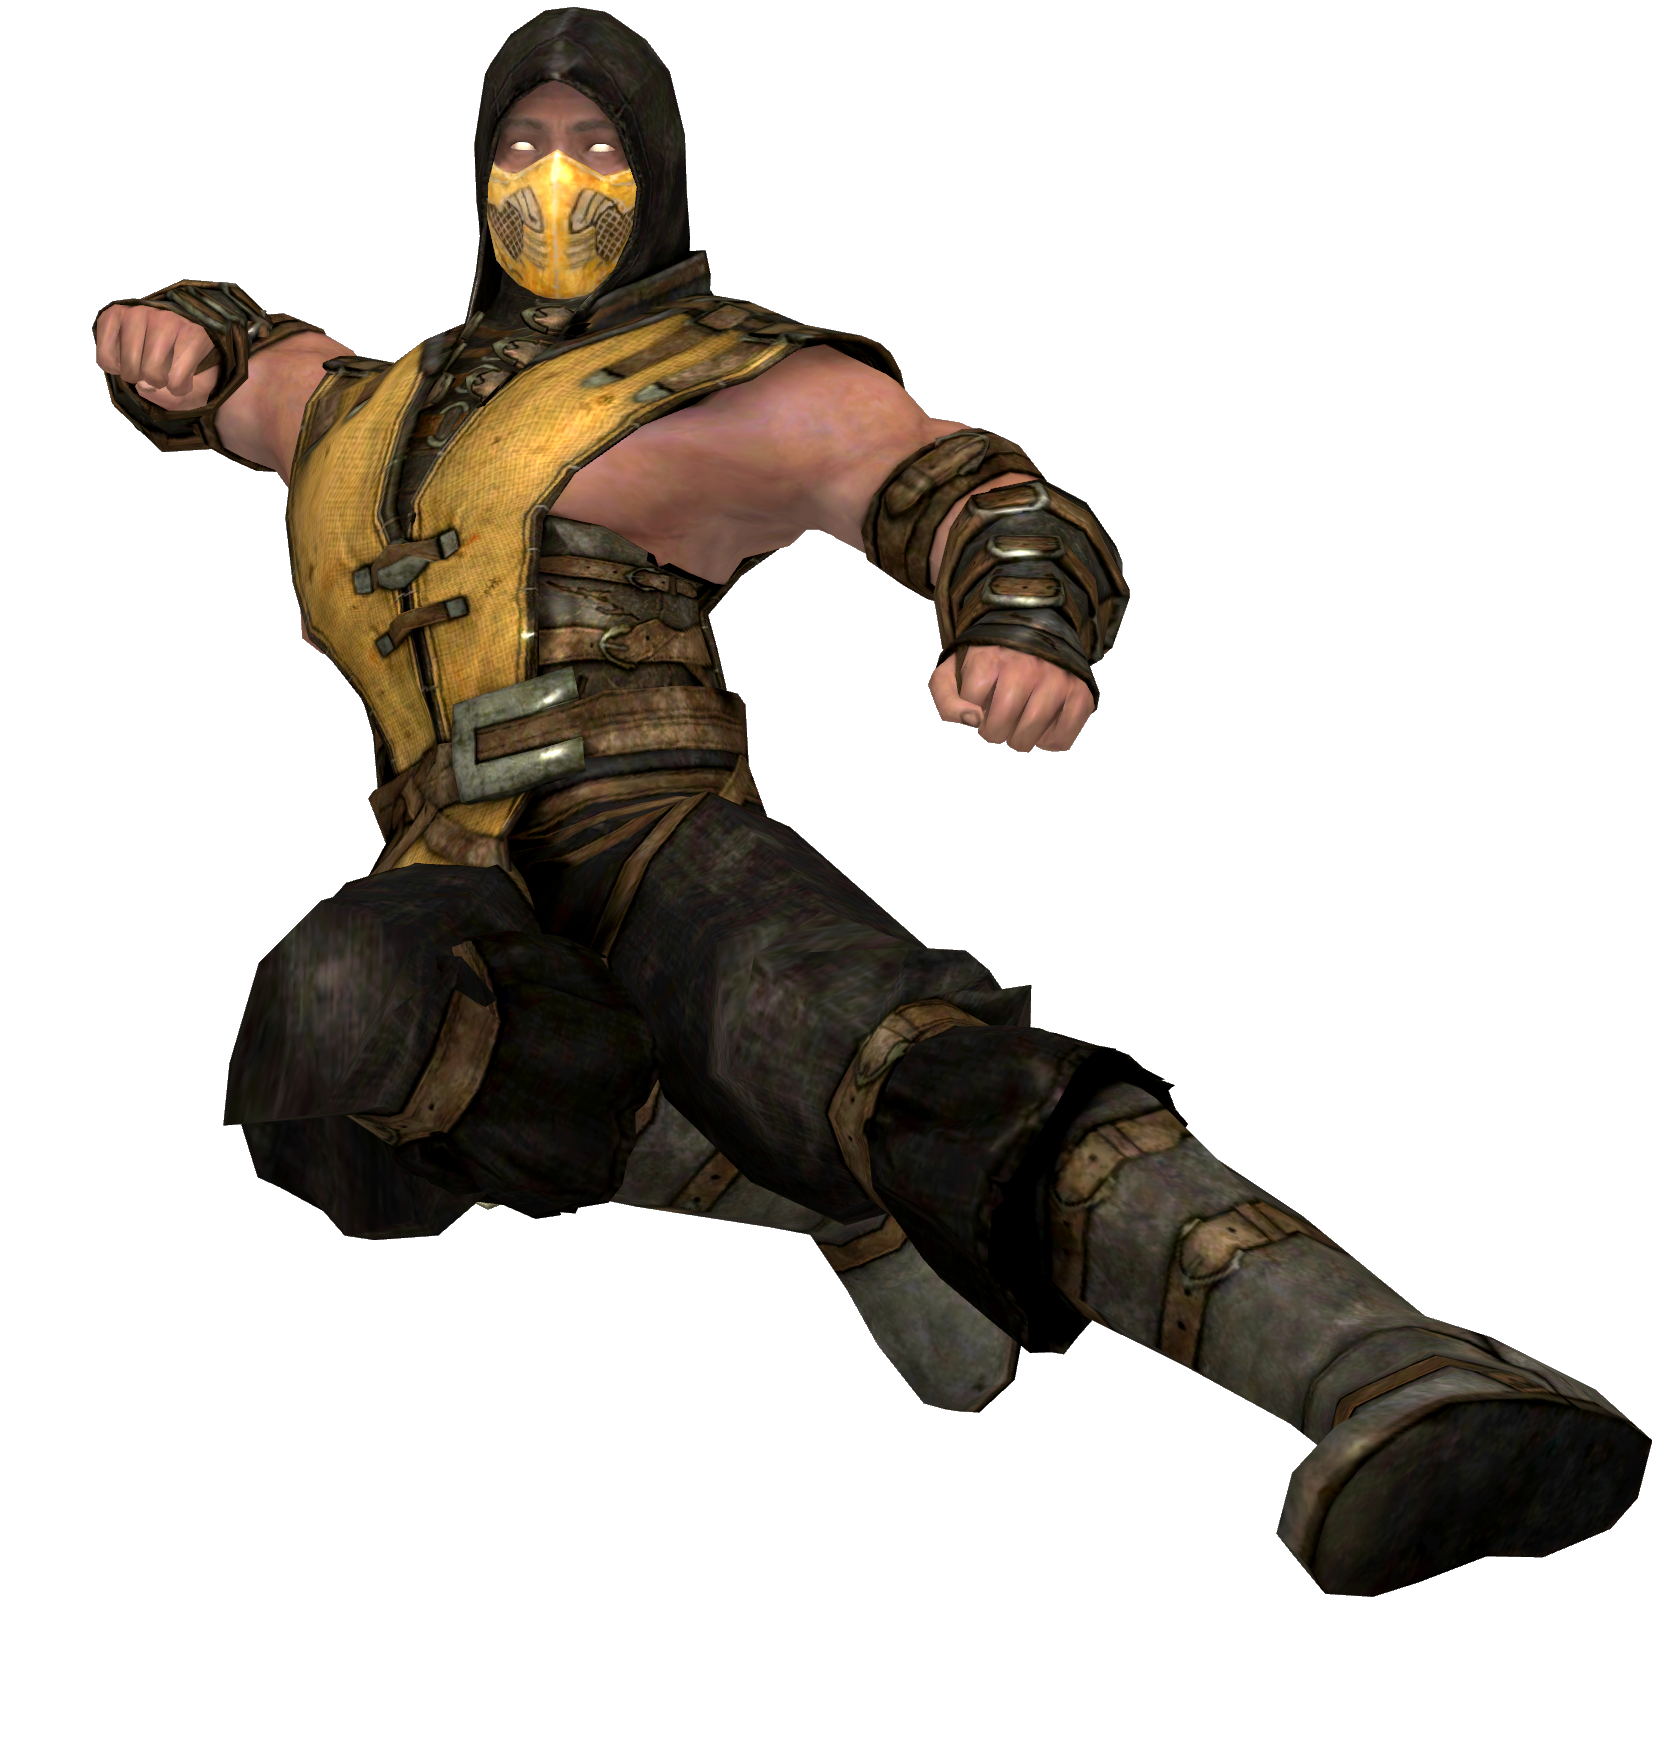 Mortal Kombat juego Personajes PNG imagen Transparente